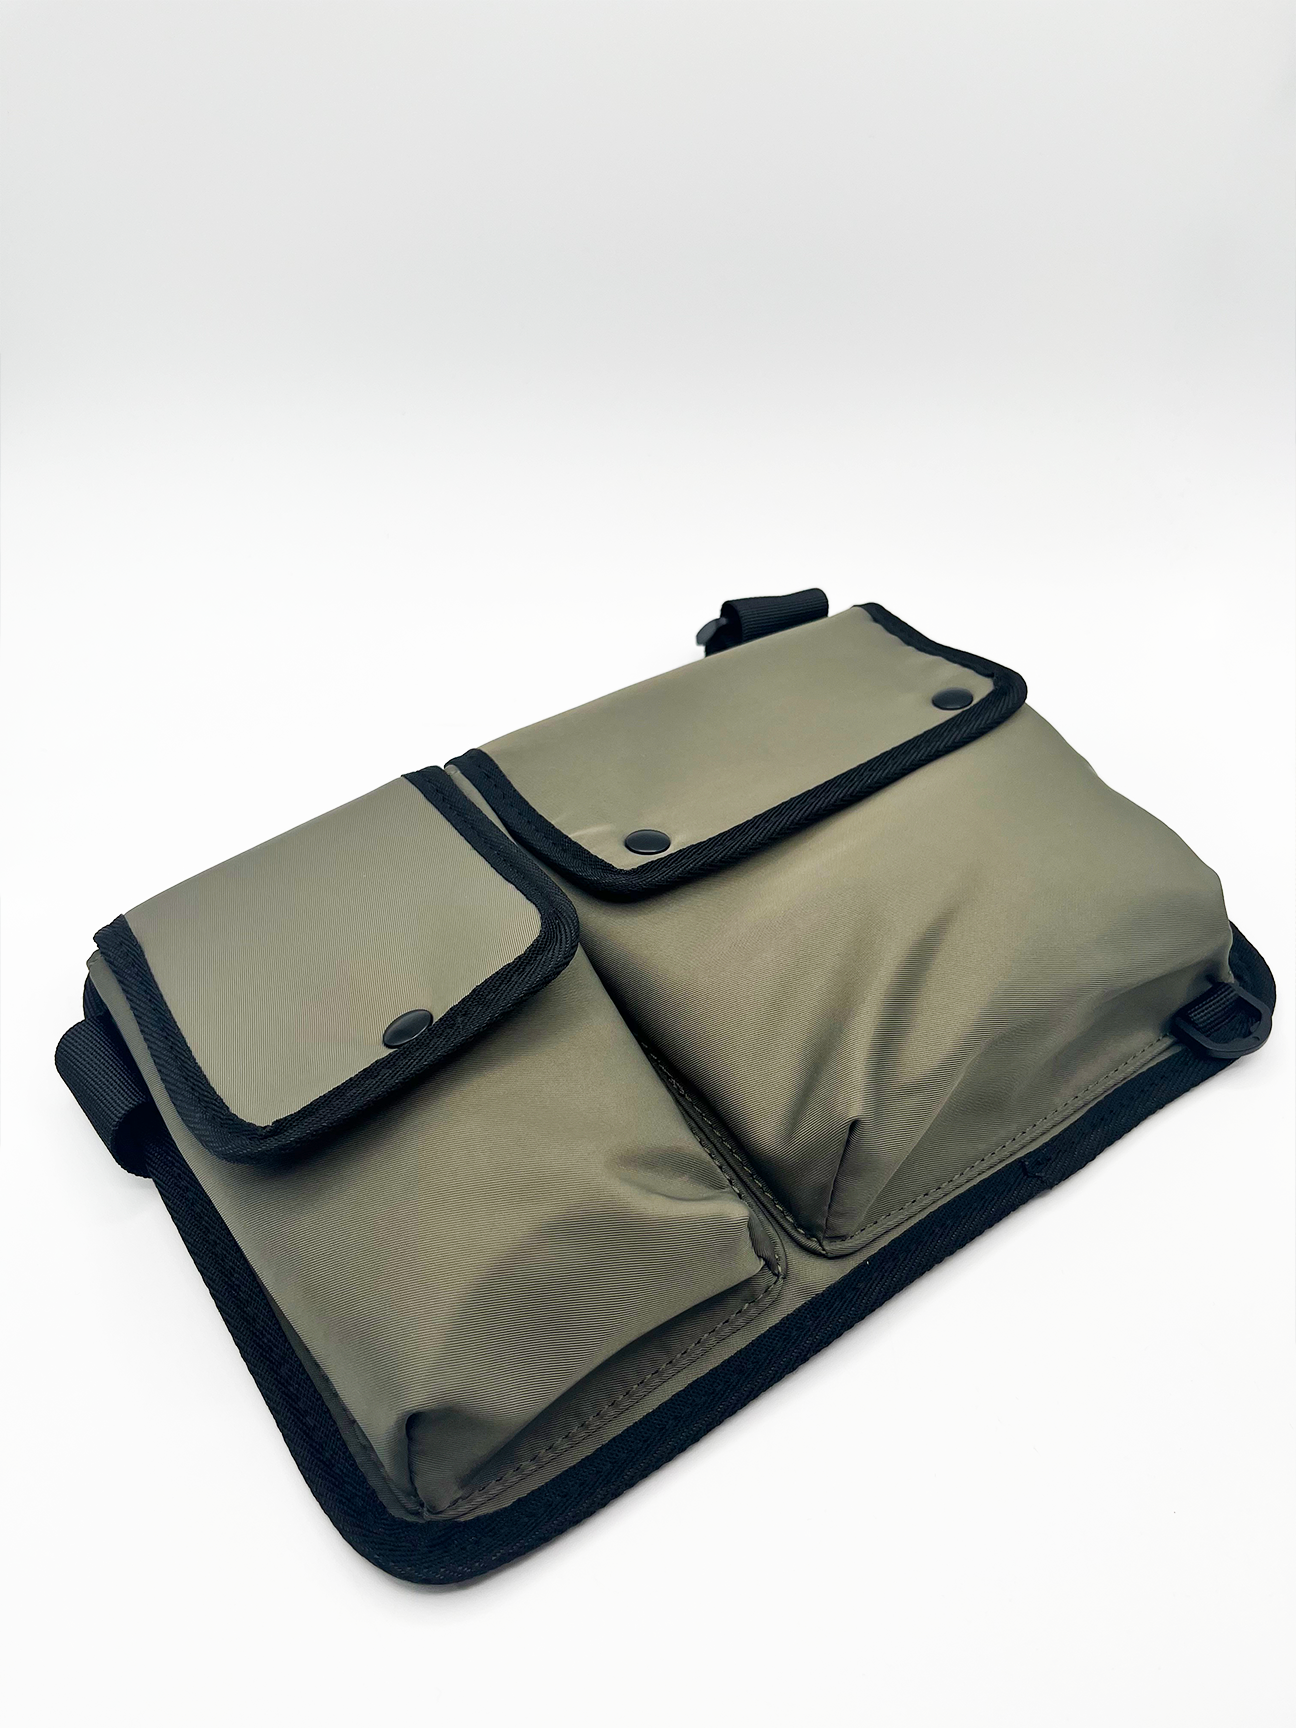 SVNX Nylon chest bag in moss